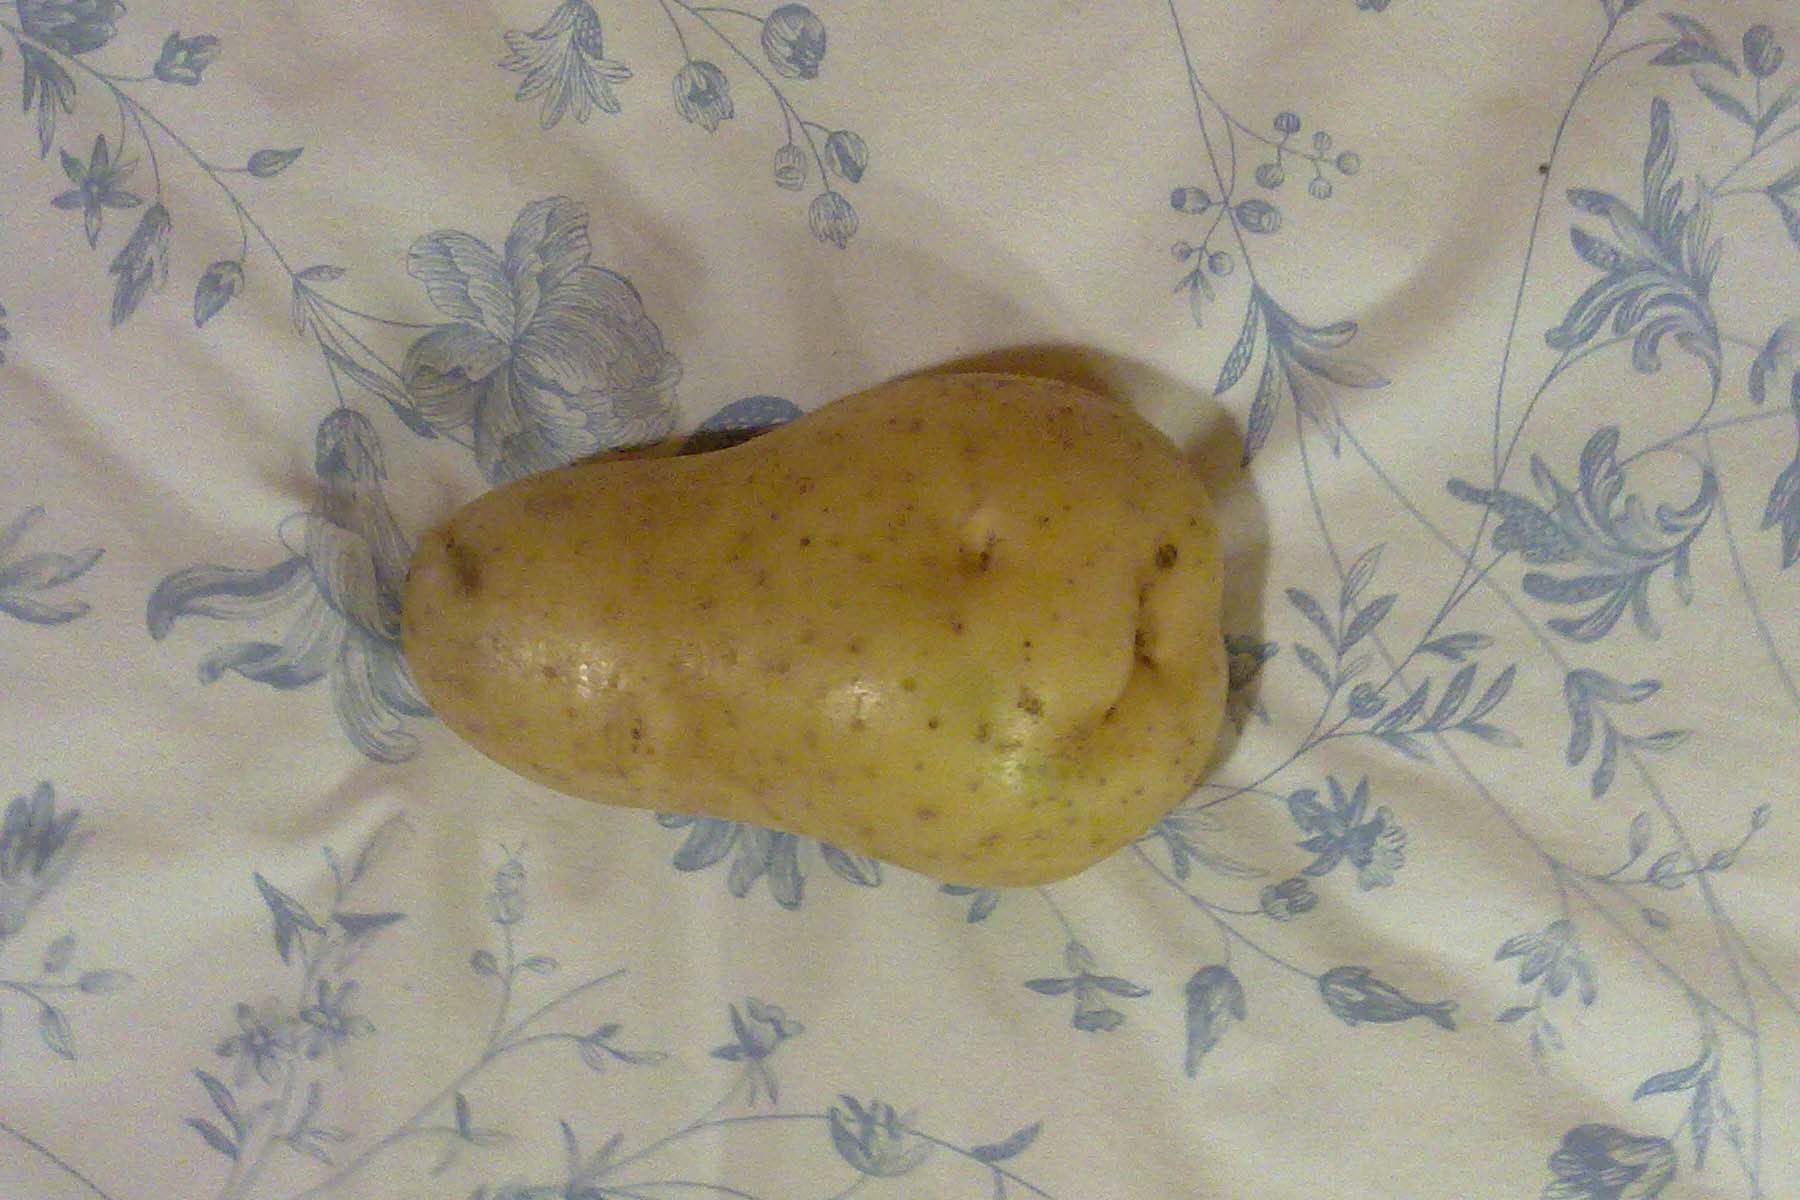 VERA MANTERO - A Enésima Comedora de Batatas